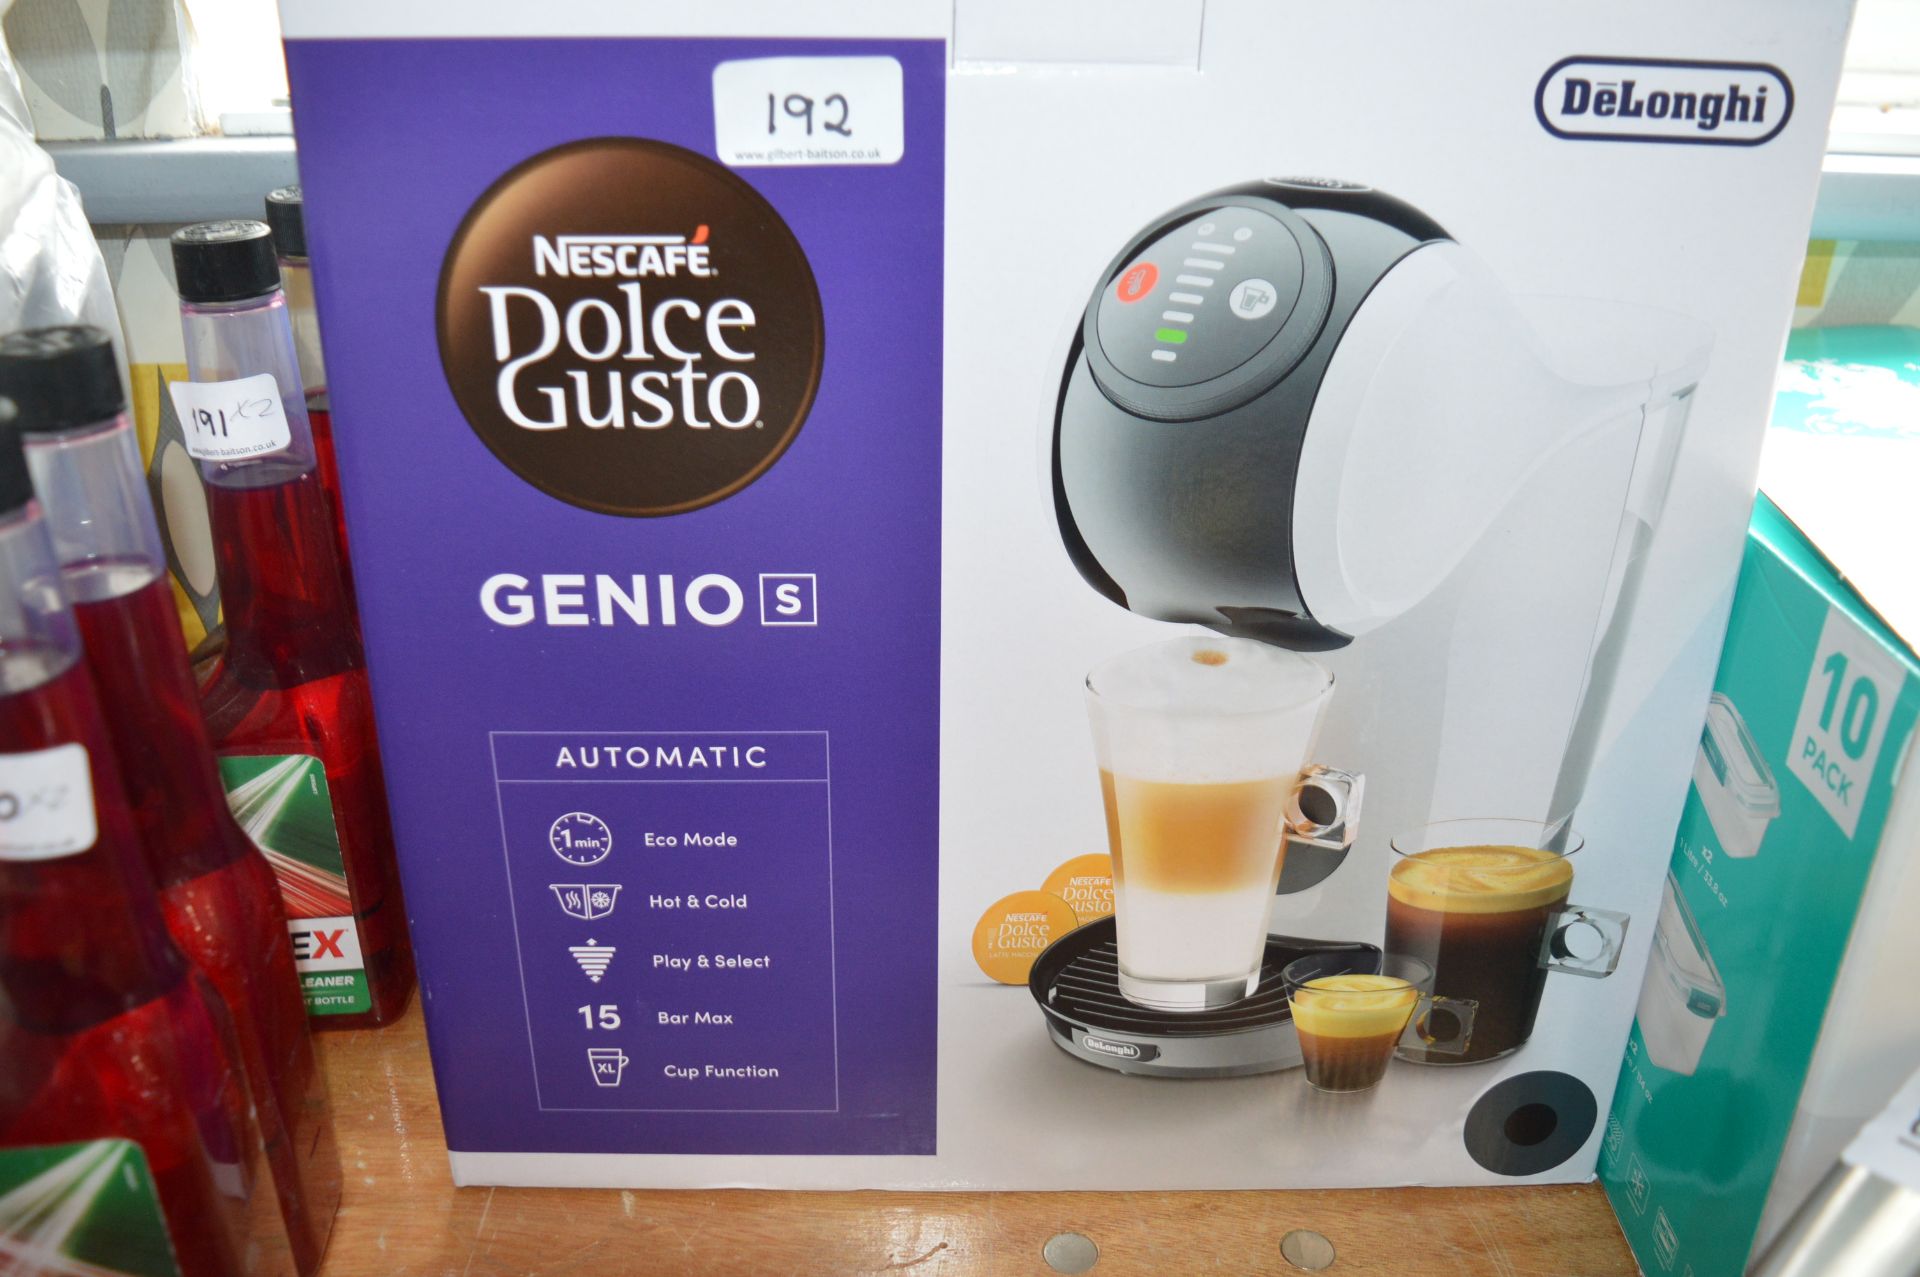 *Delonghi Dolce Gusto Coffee Machine